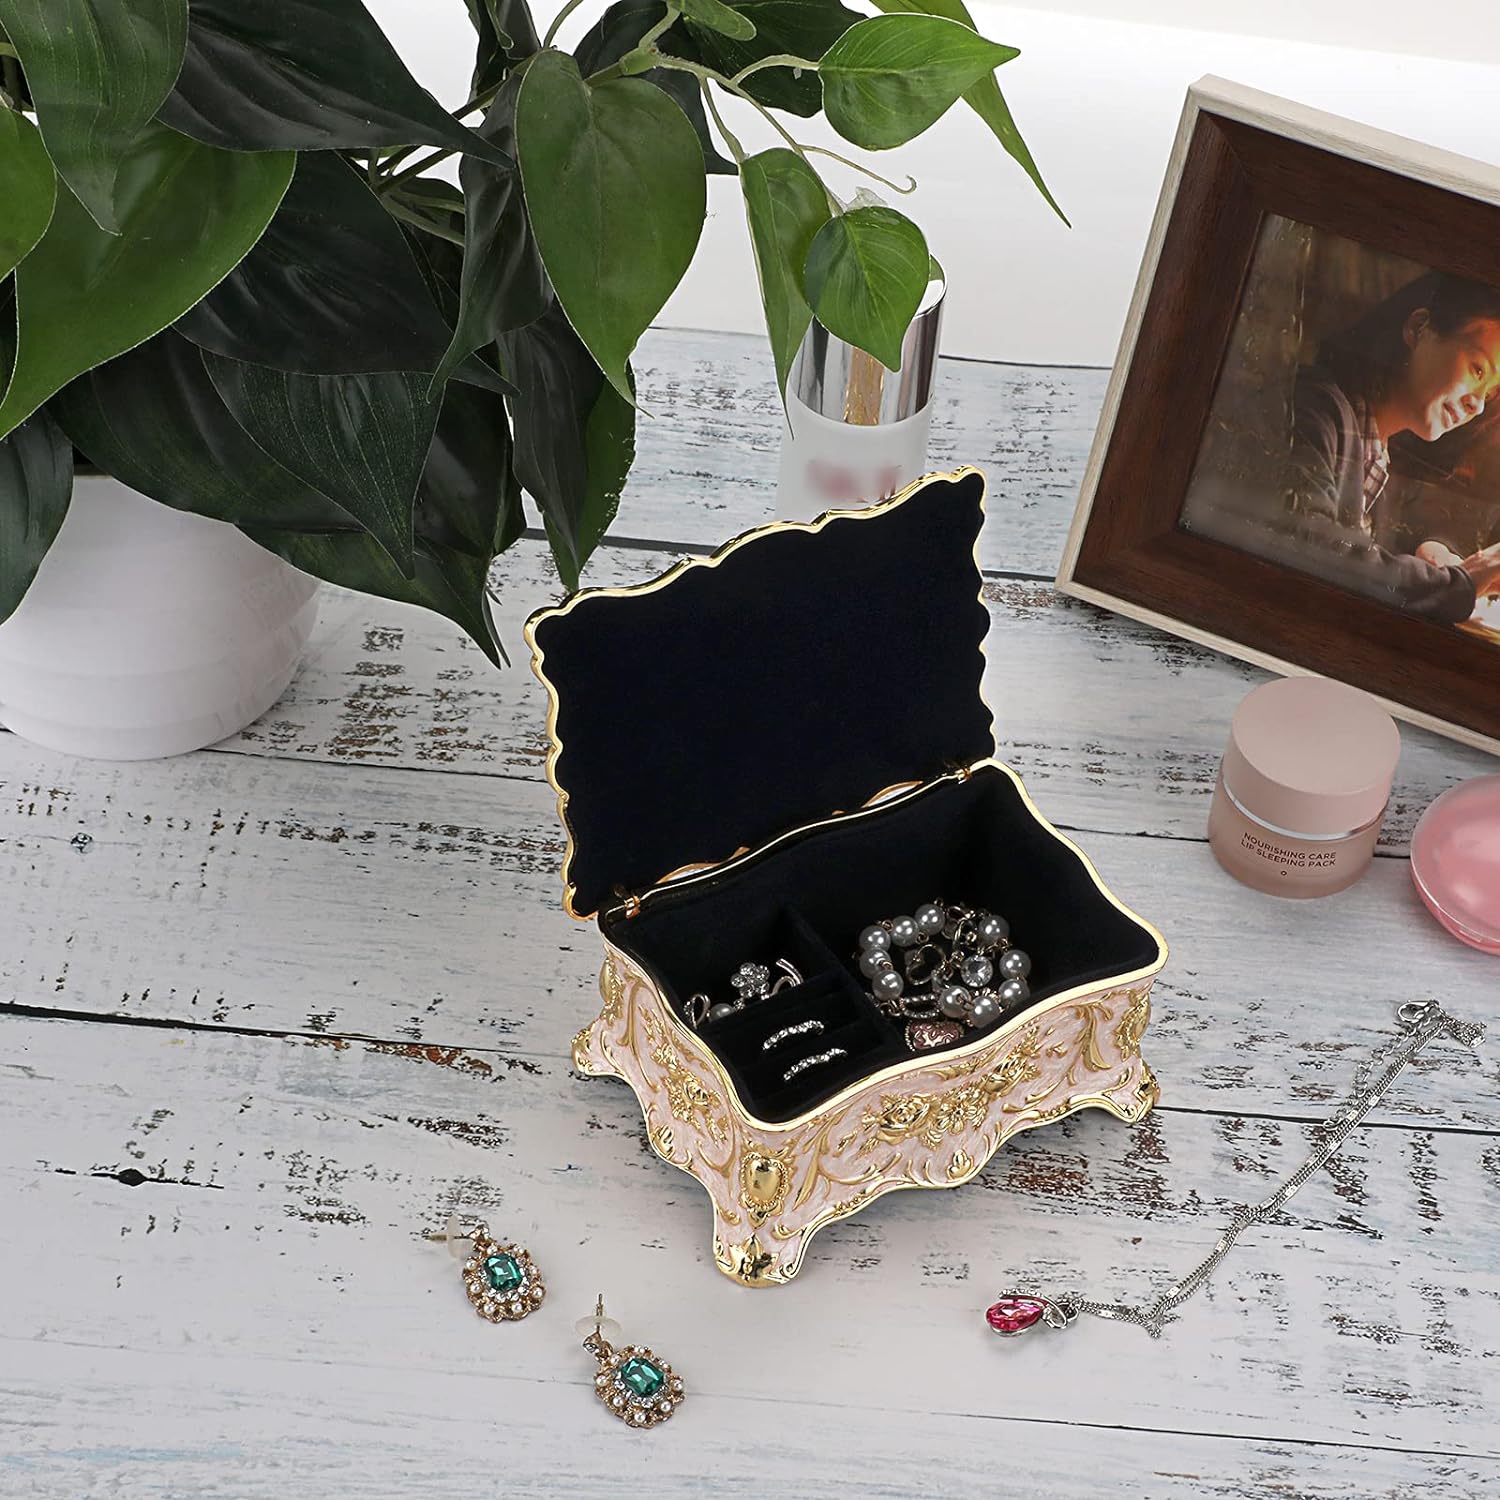 Hipiw Caja organizadora de joyas vintage, caja de almacenamiento de metal para